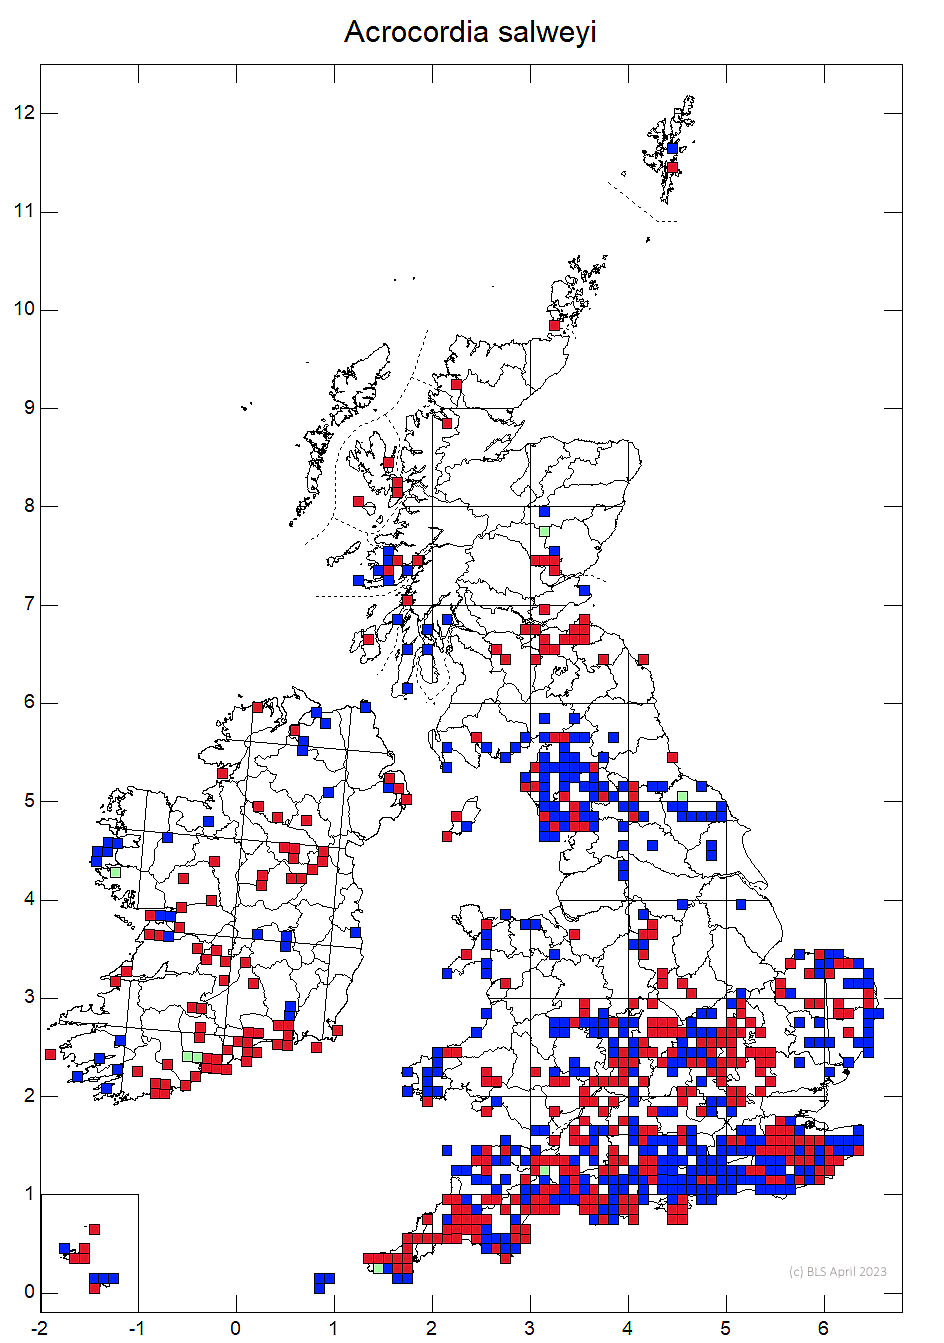 Acrocordia salweyi 10km sq distribution map